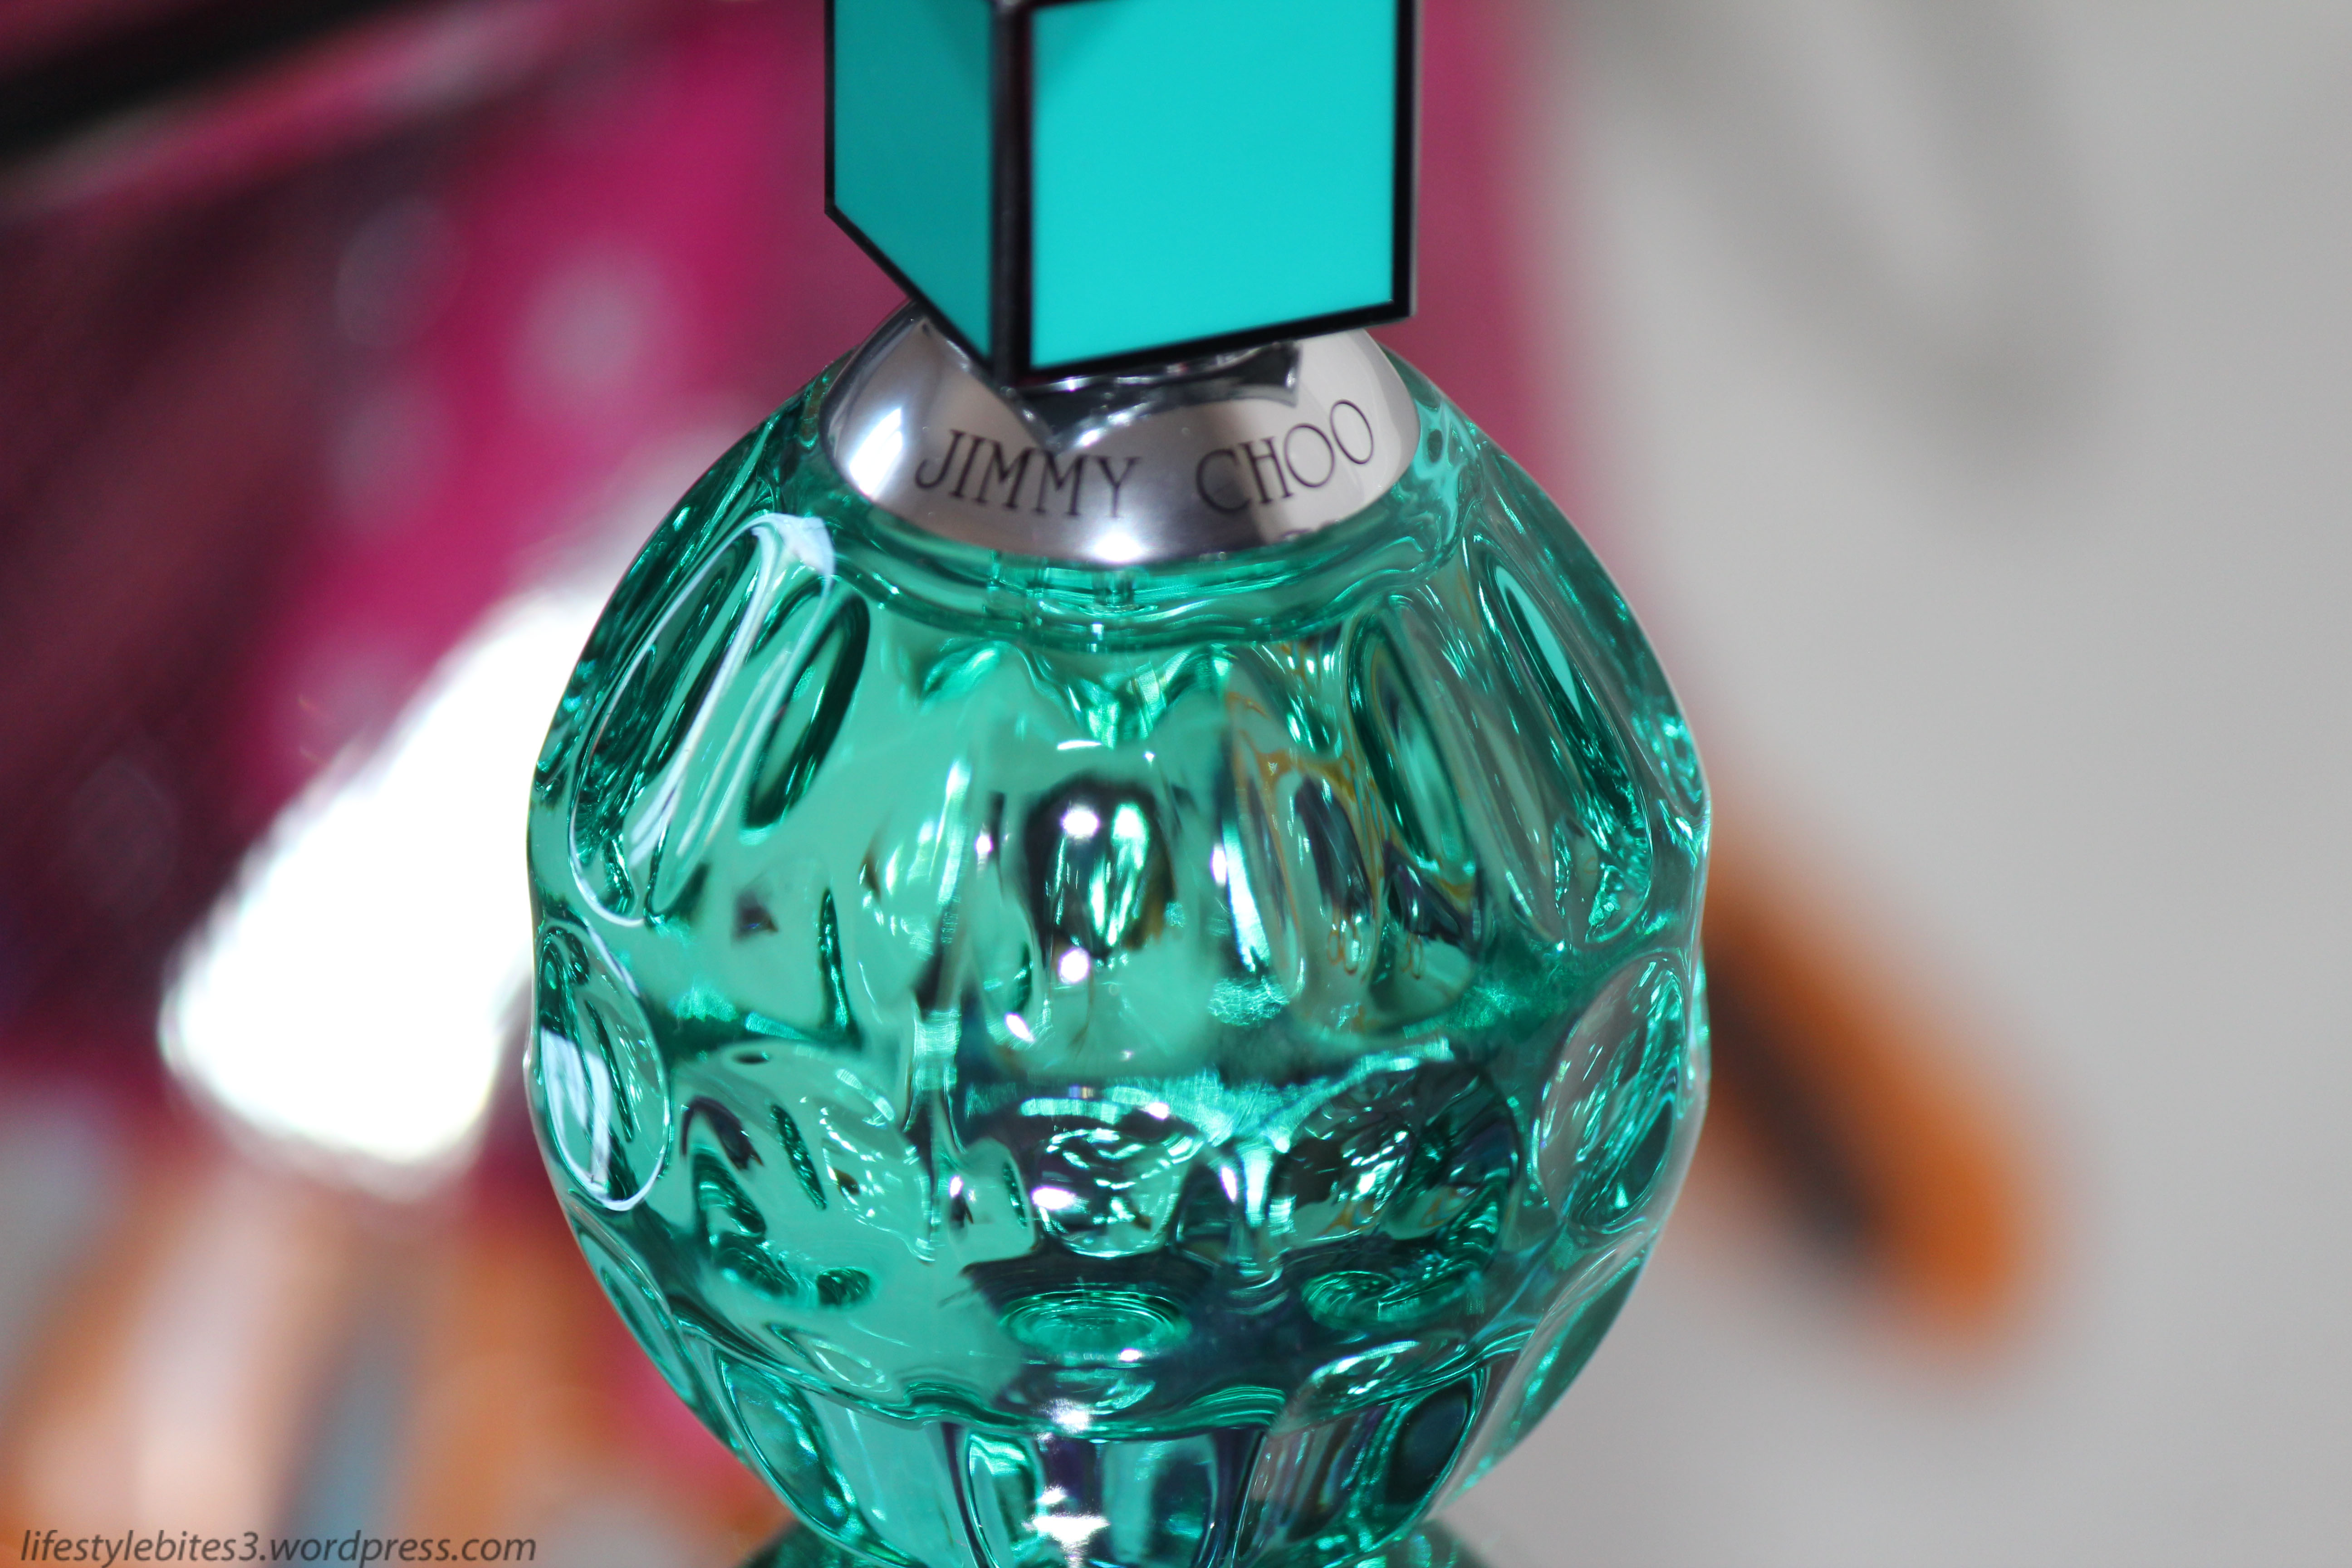 jimmy choo perfume green bottle